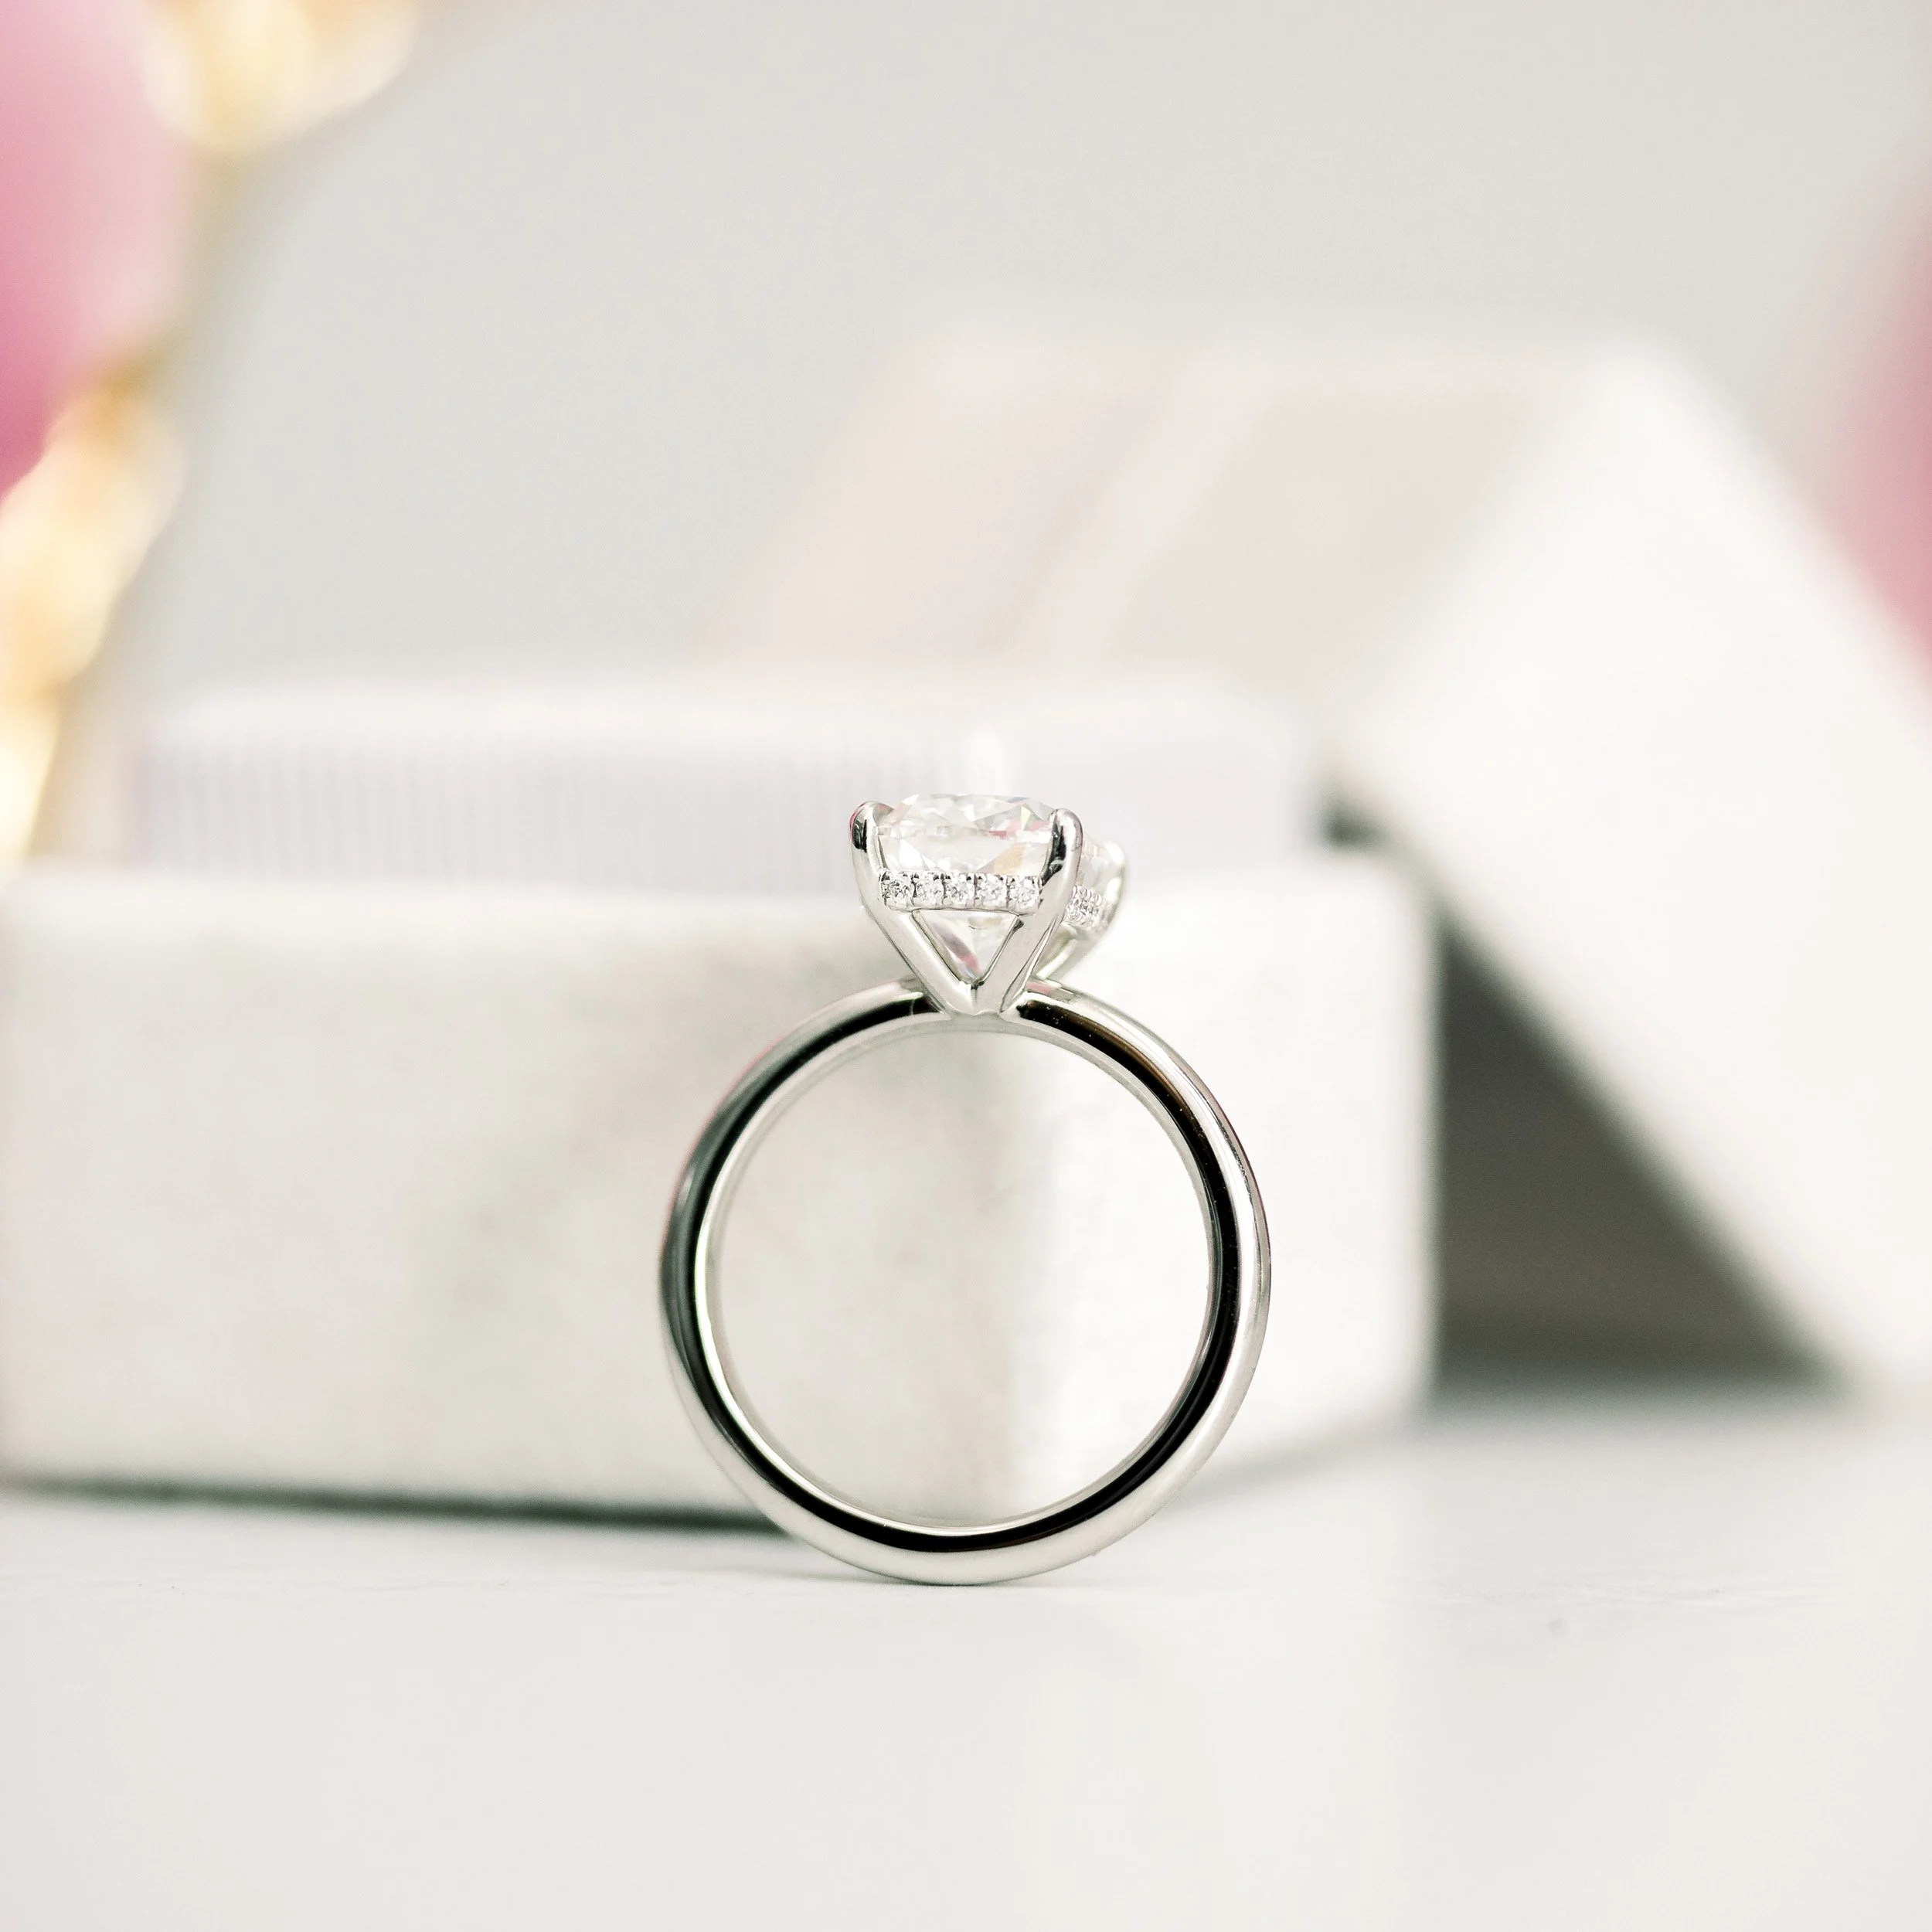 Platinum 3 Carat Cushion Cut Solitaire Engagement Ring with Hidden Halo Featuring Lab Diamonds Ada Diamonds Design AD-221 Profile View